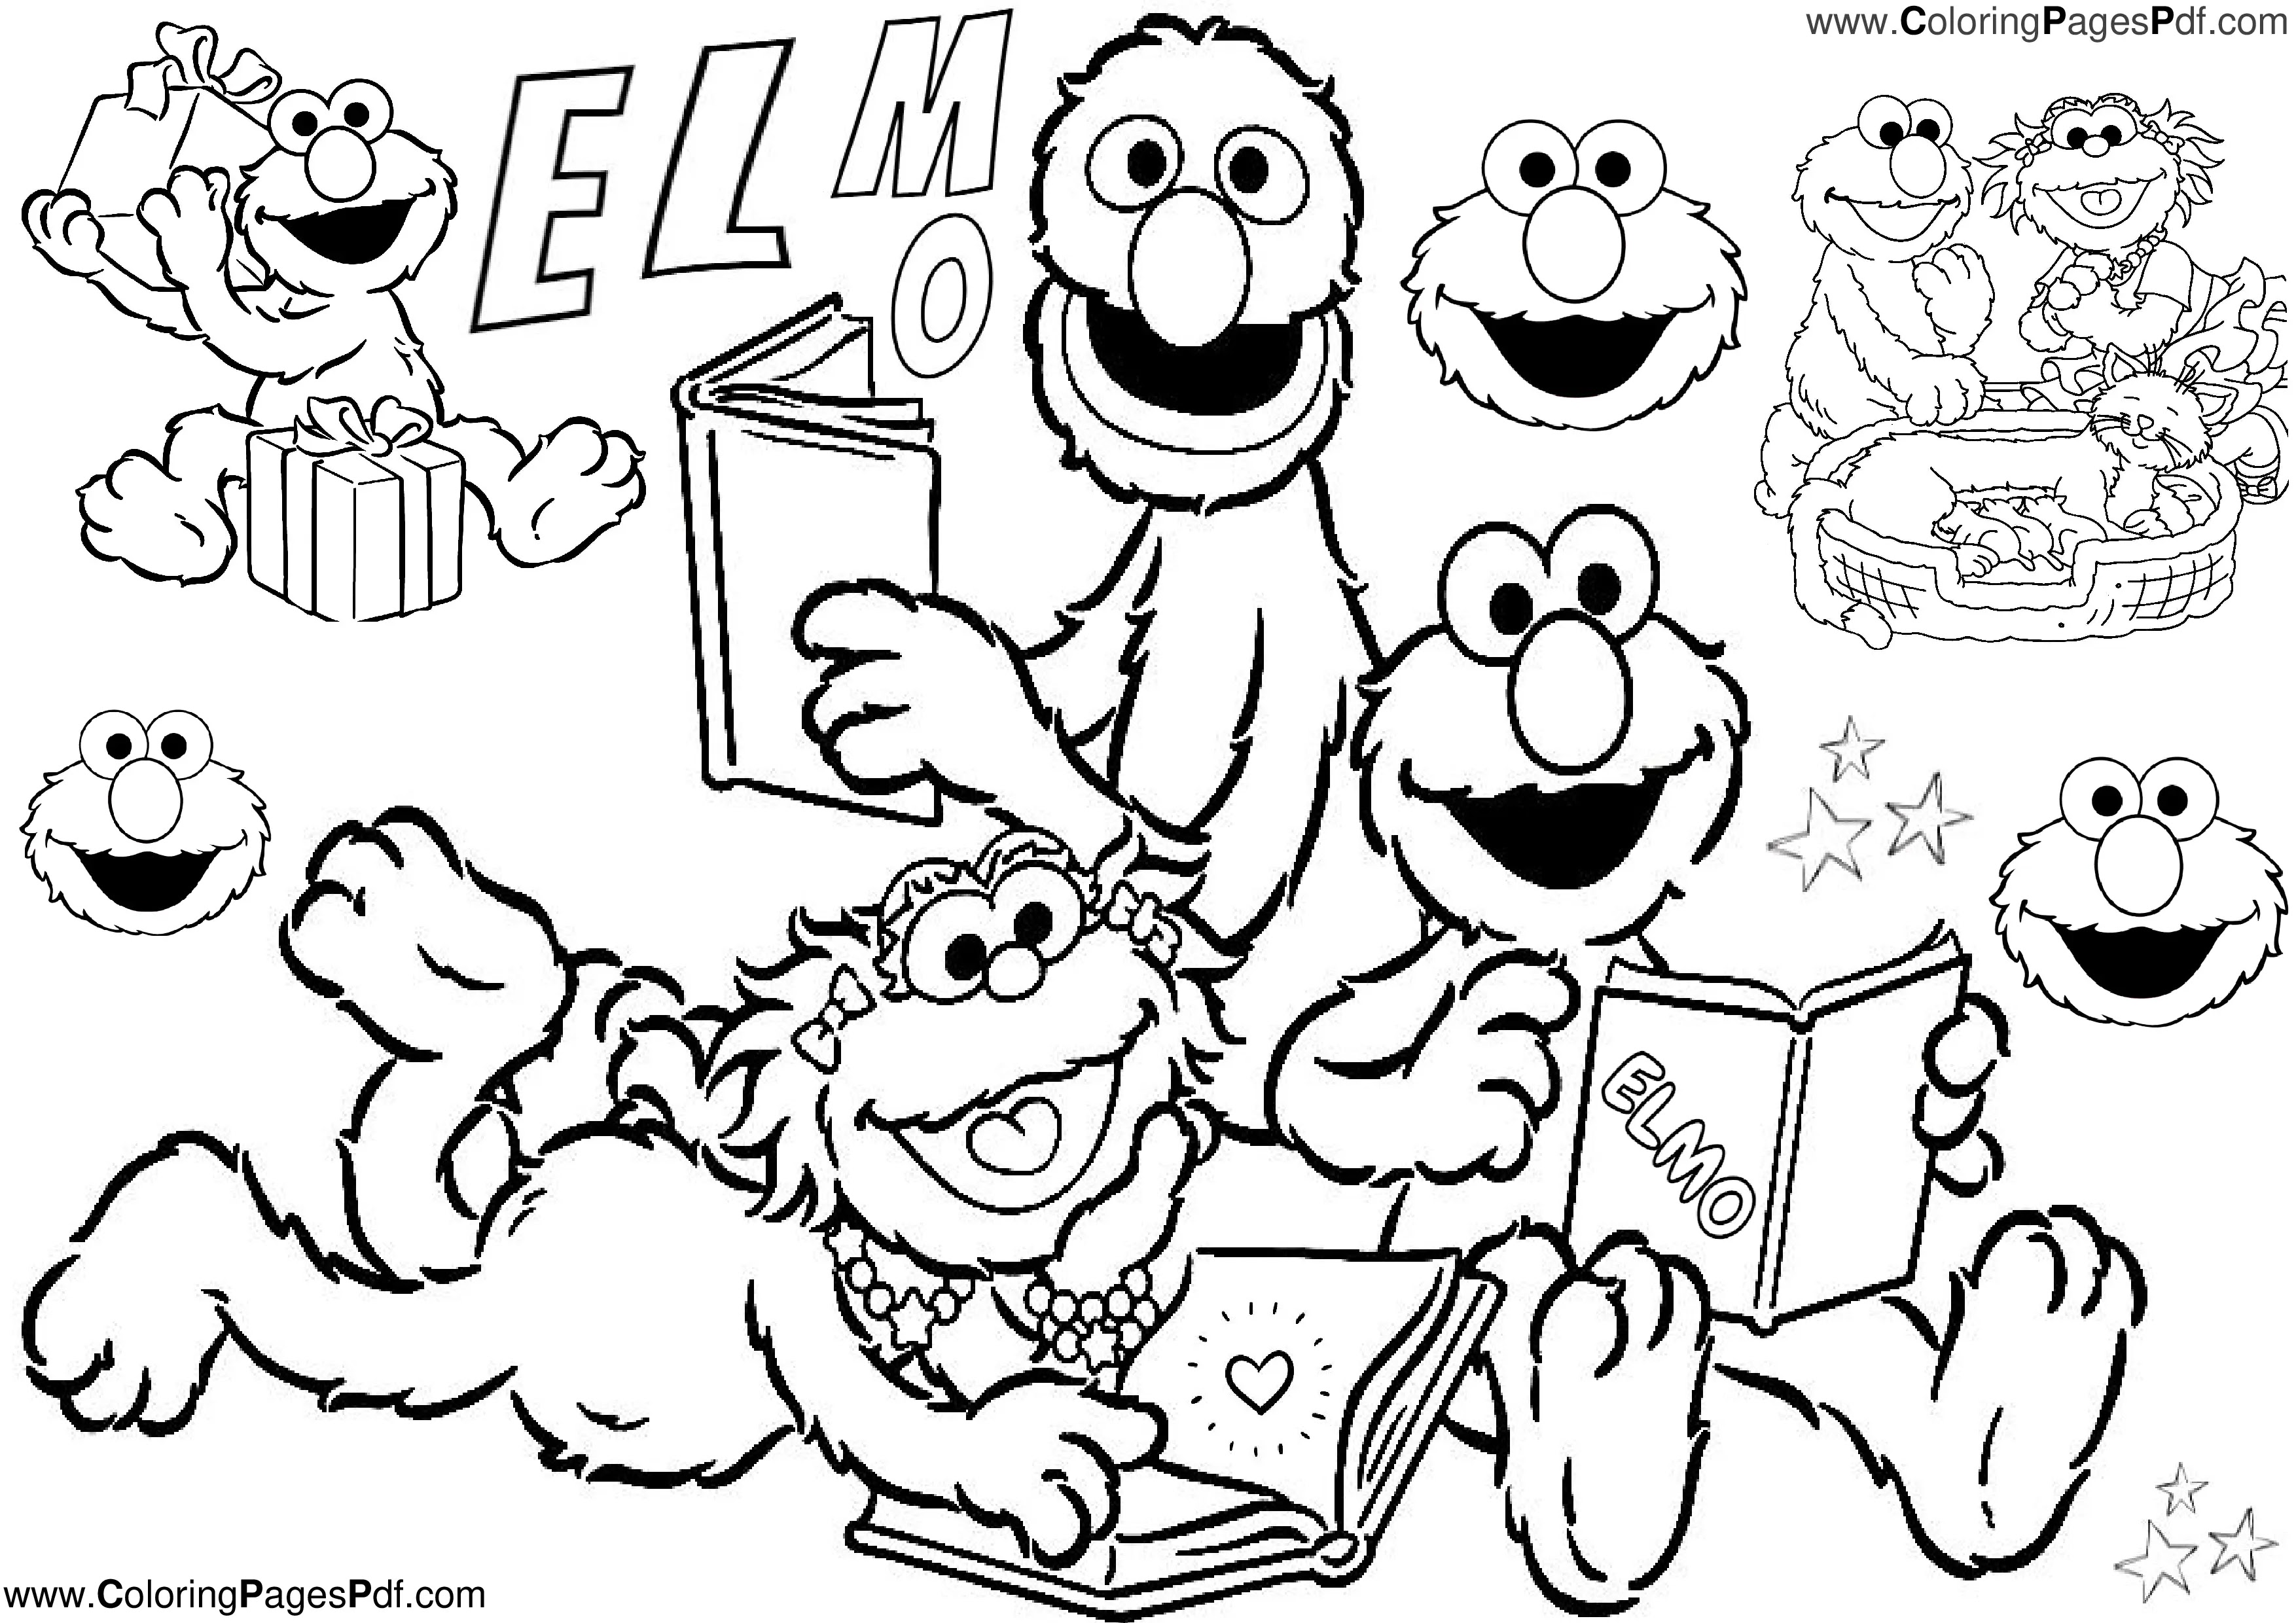 Elmo coloring pages pdf